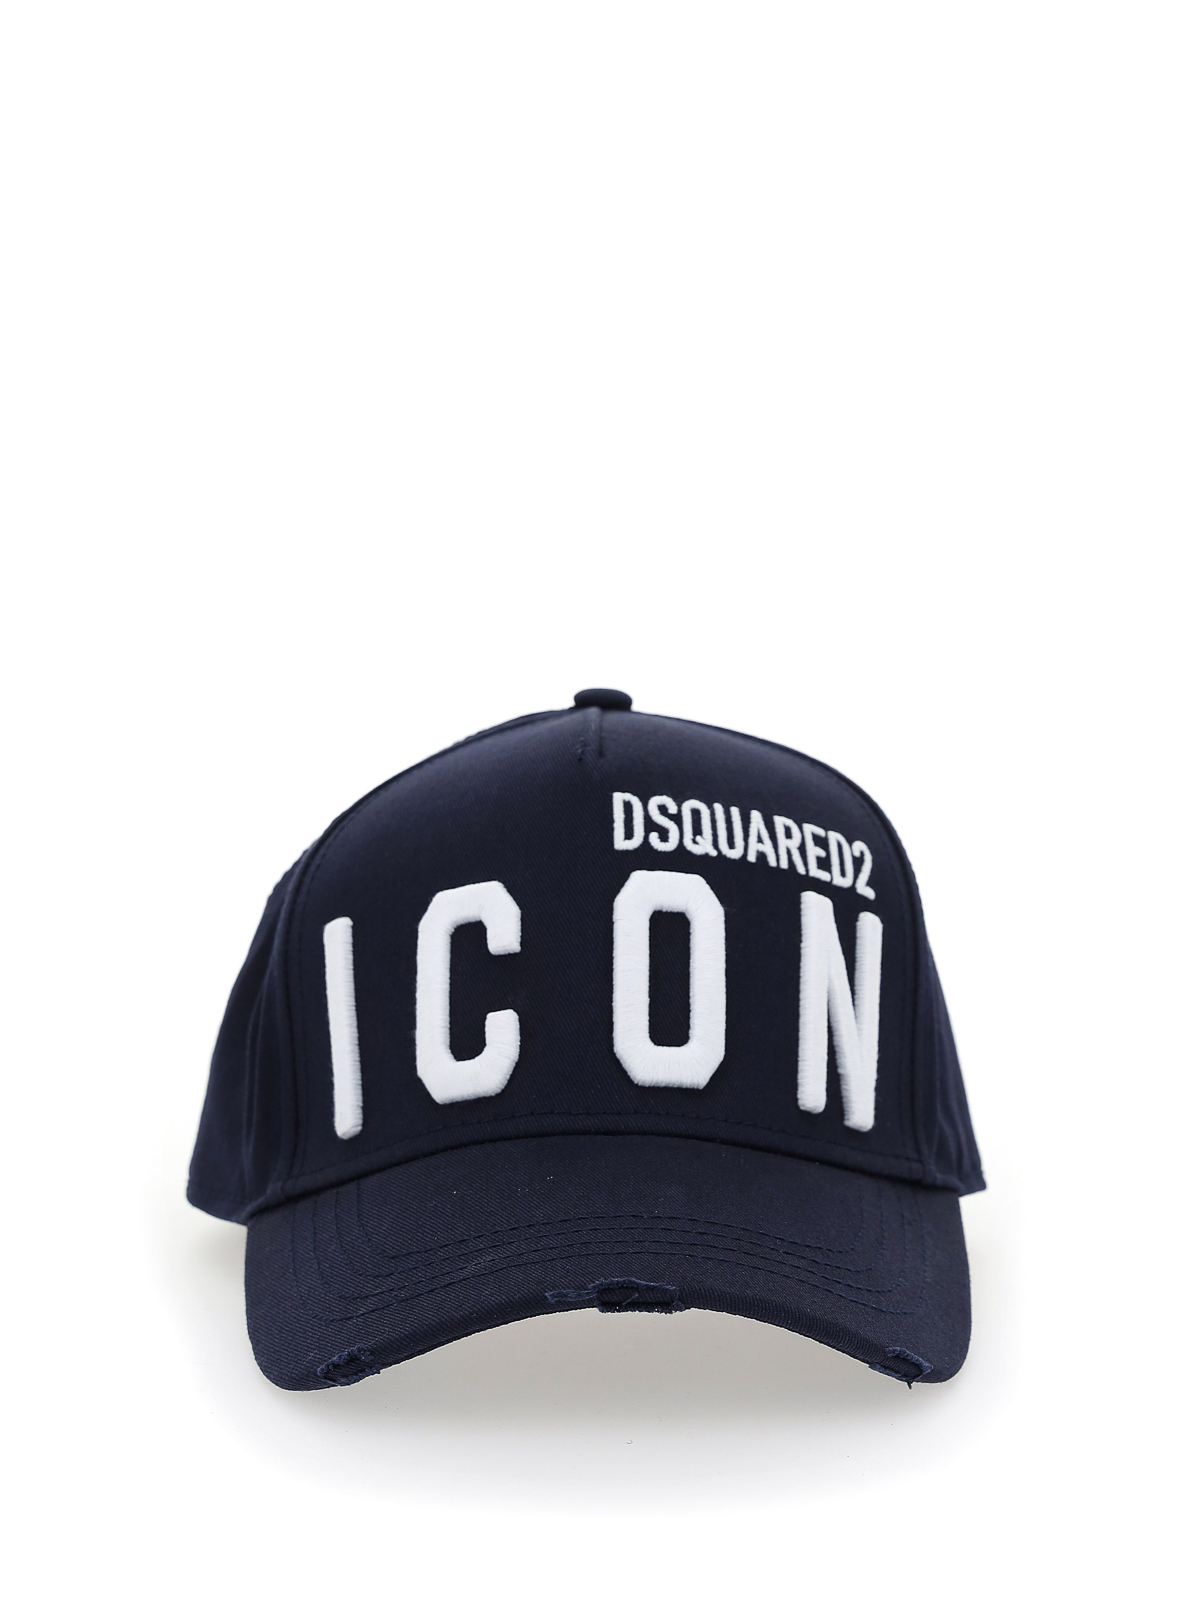 DSQUARED2, Baseball Icon Cap, Baseball Caps